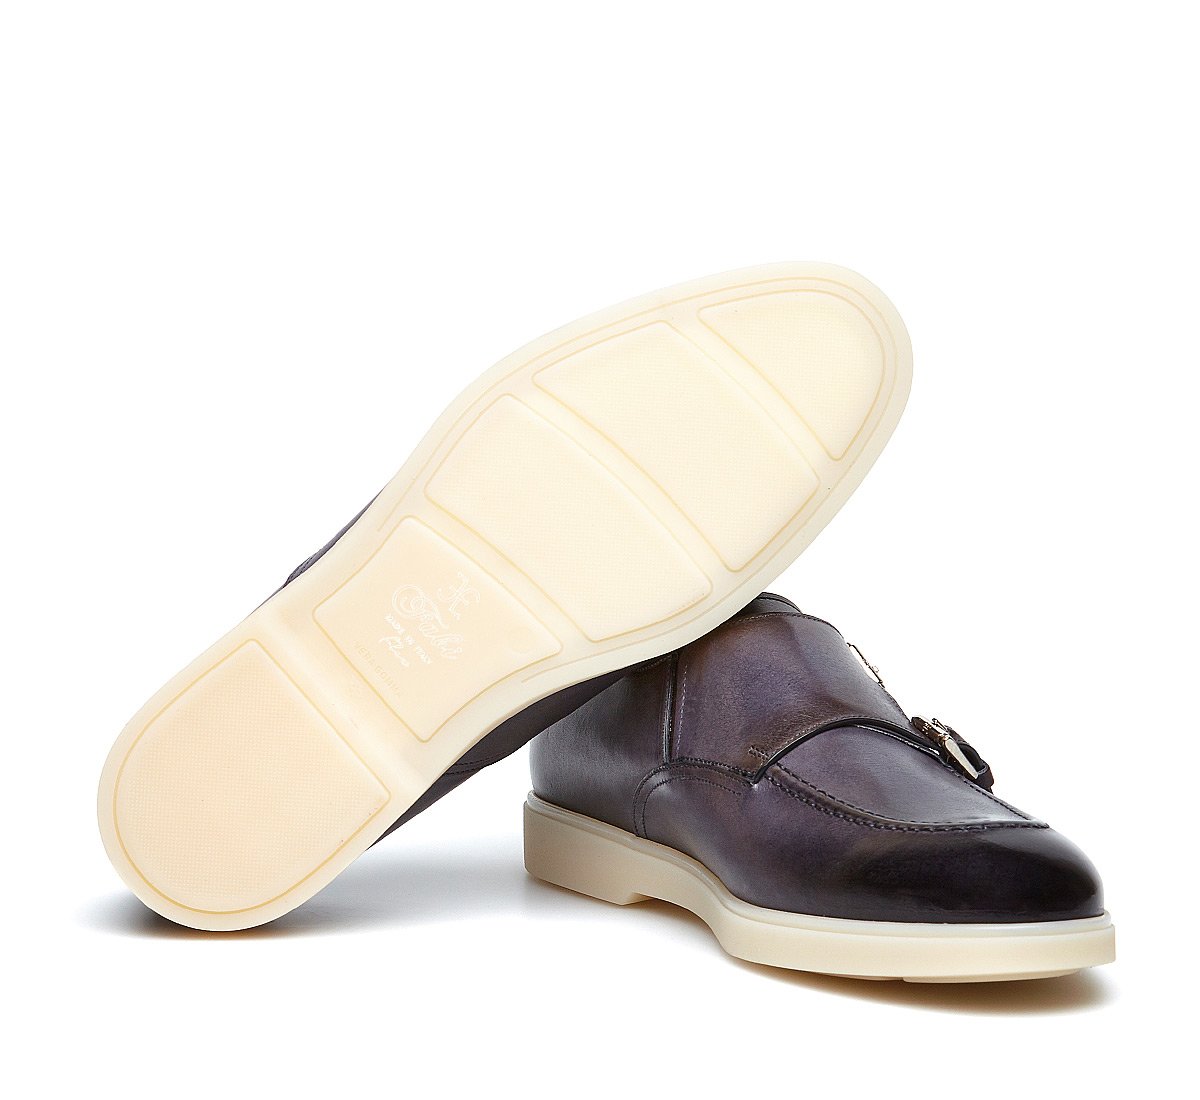 Fabi Flex double monk-strap shoes in exquisite calfskin